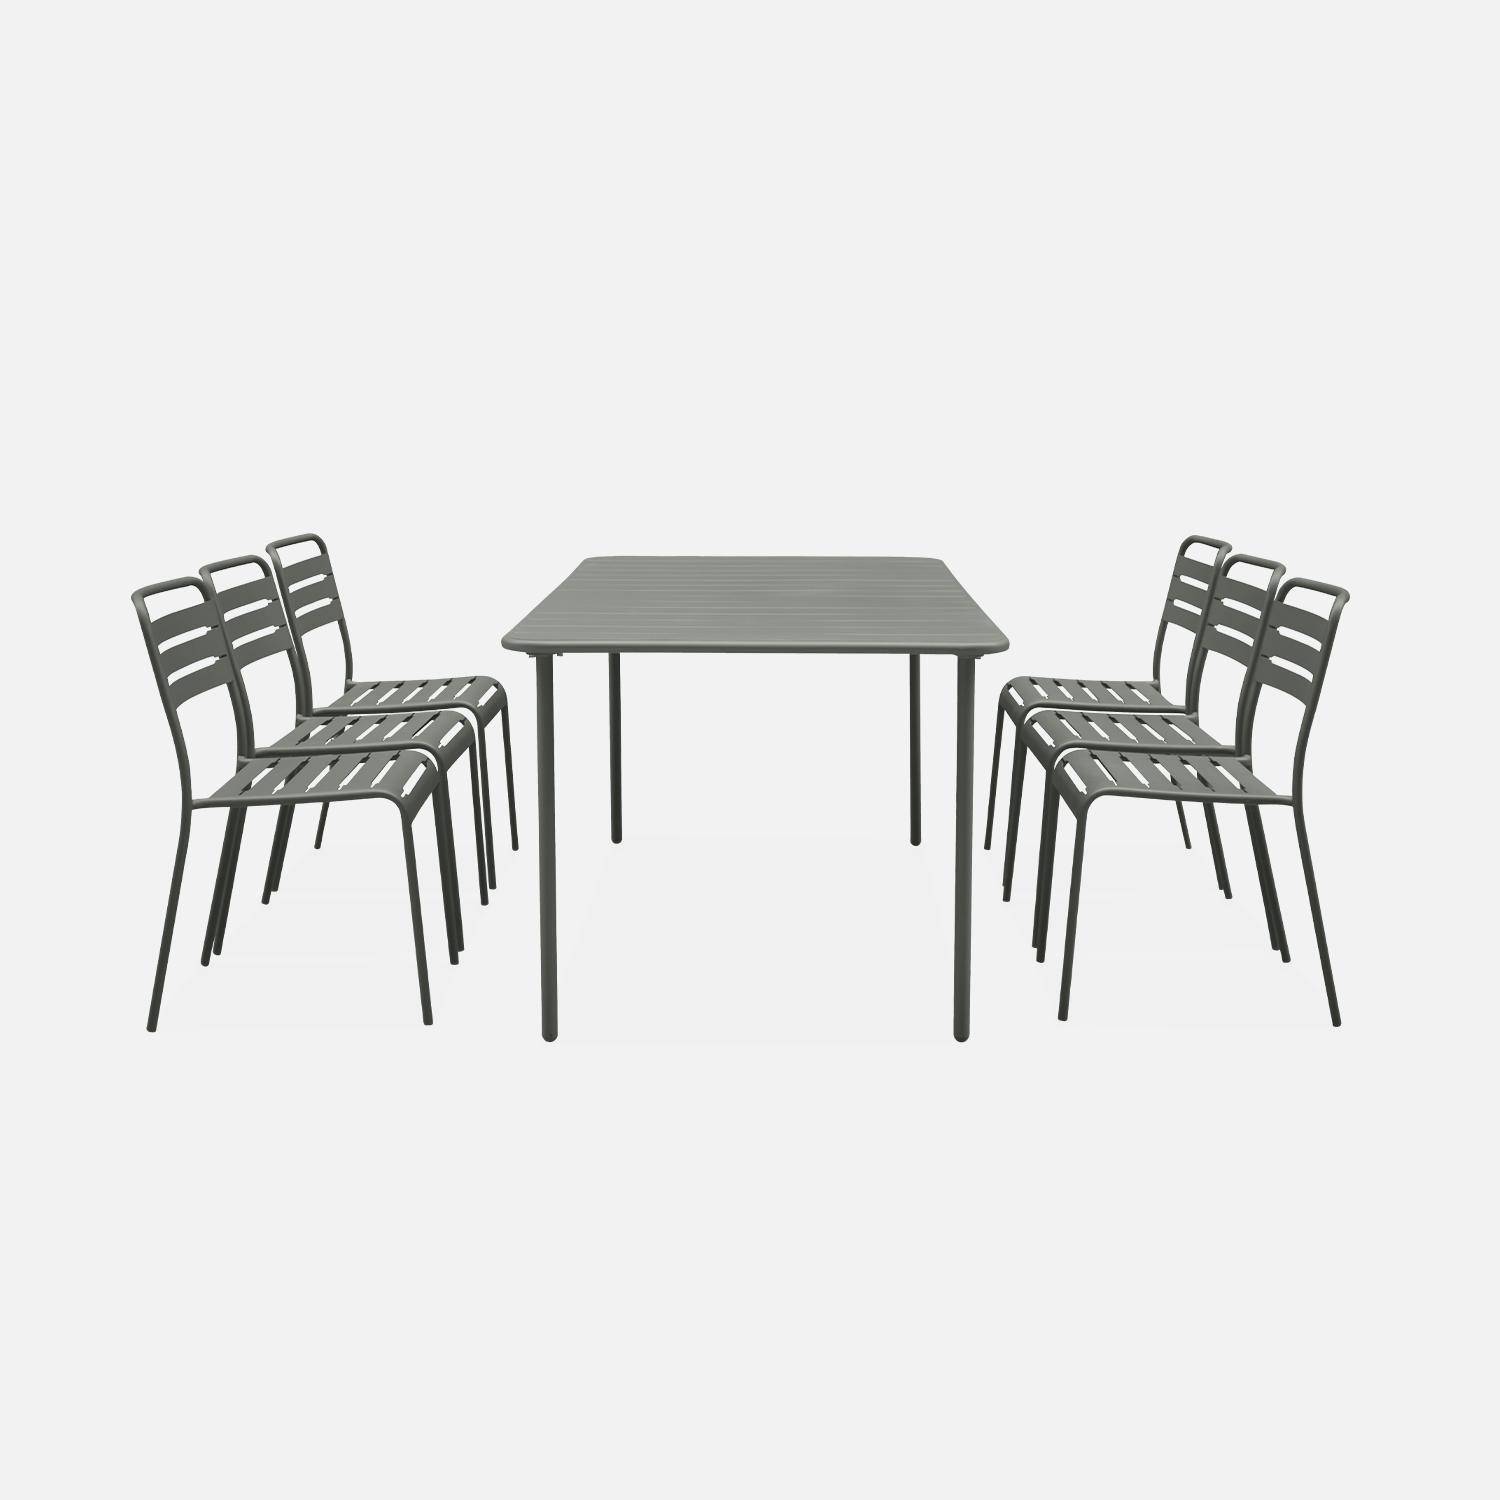 6-8 seater rectangular steel garden table set with chairs, 160cm, khaki green,sweeek,Photo4